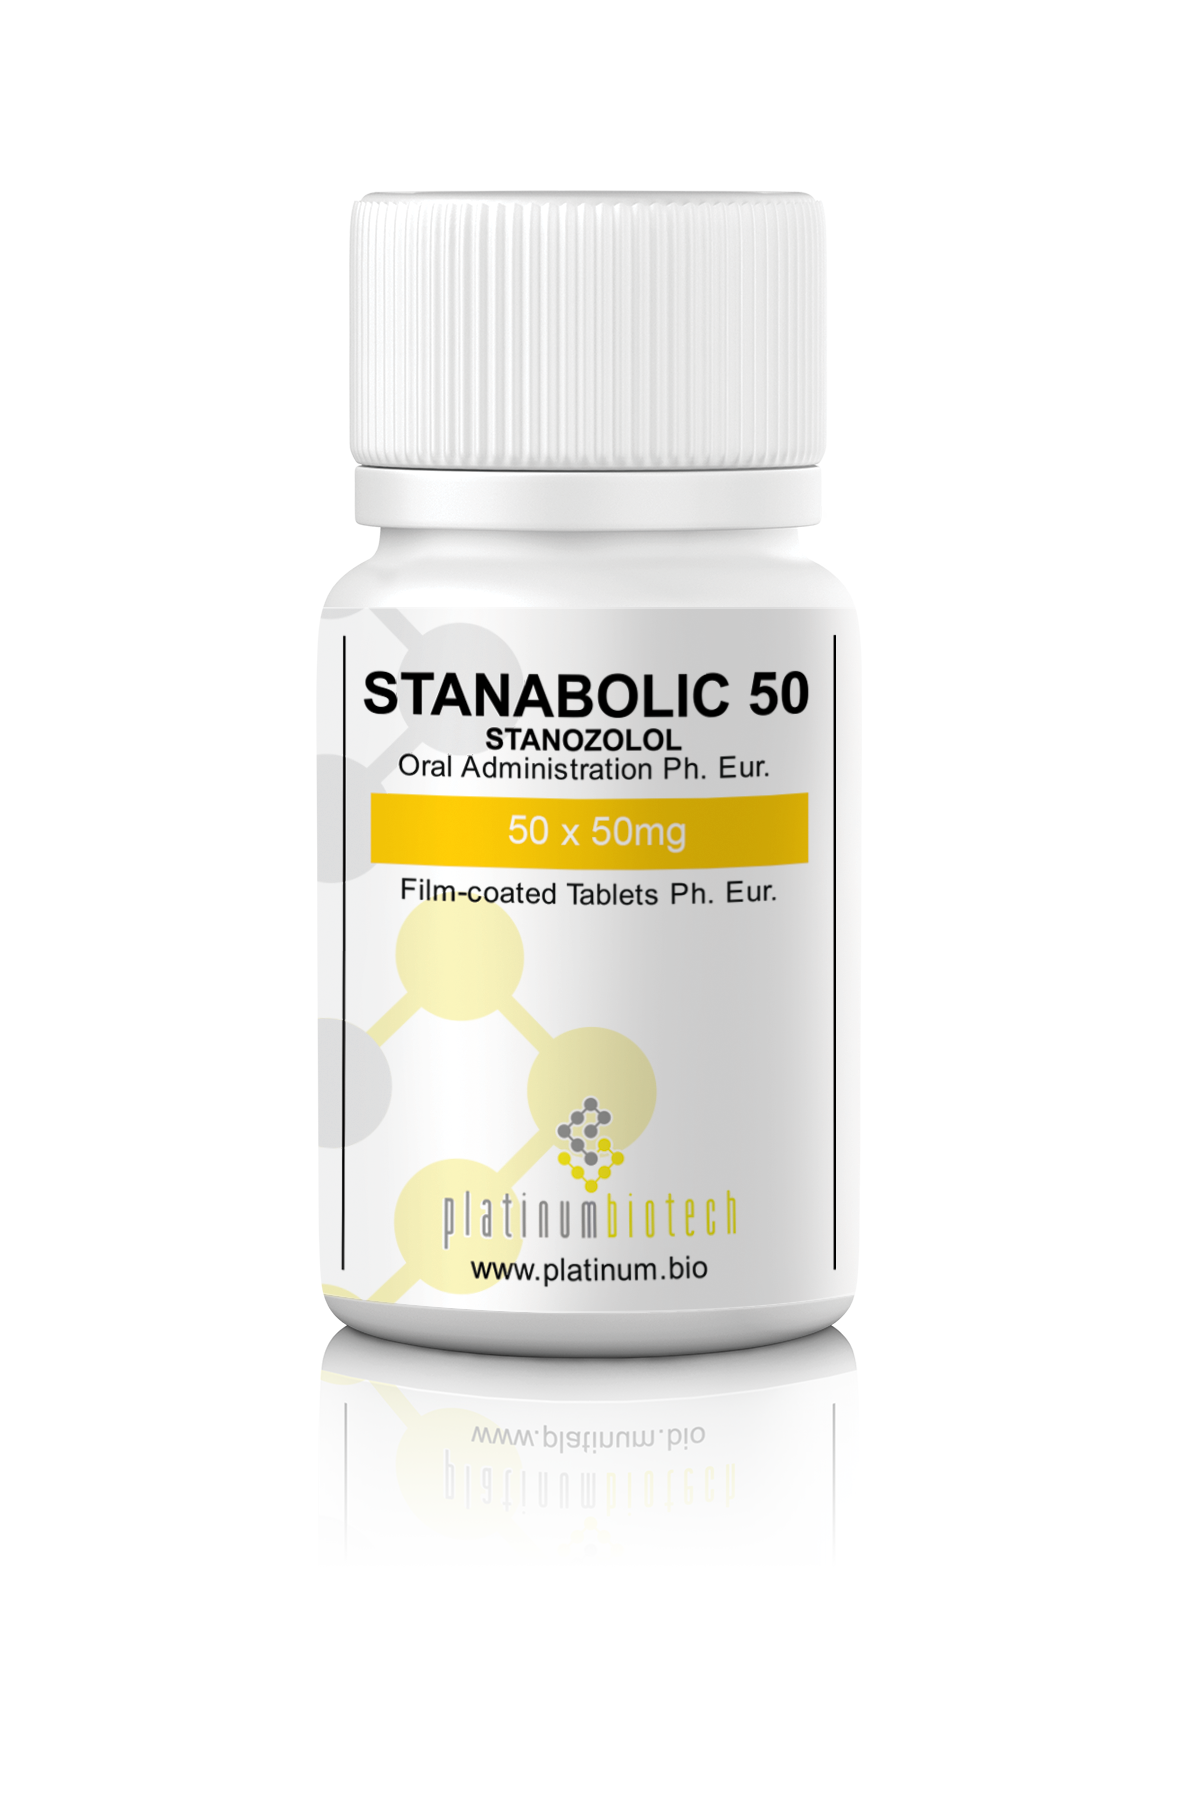 Stanabolic 50